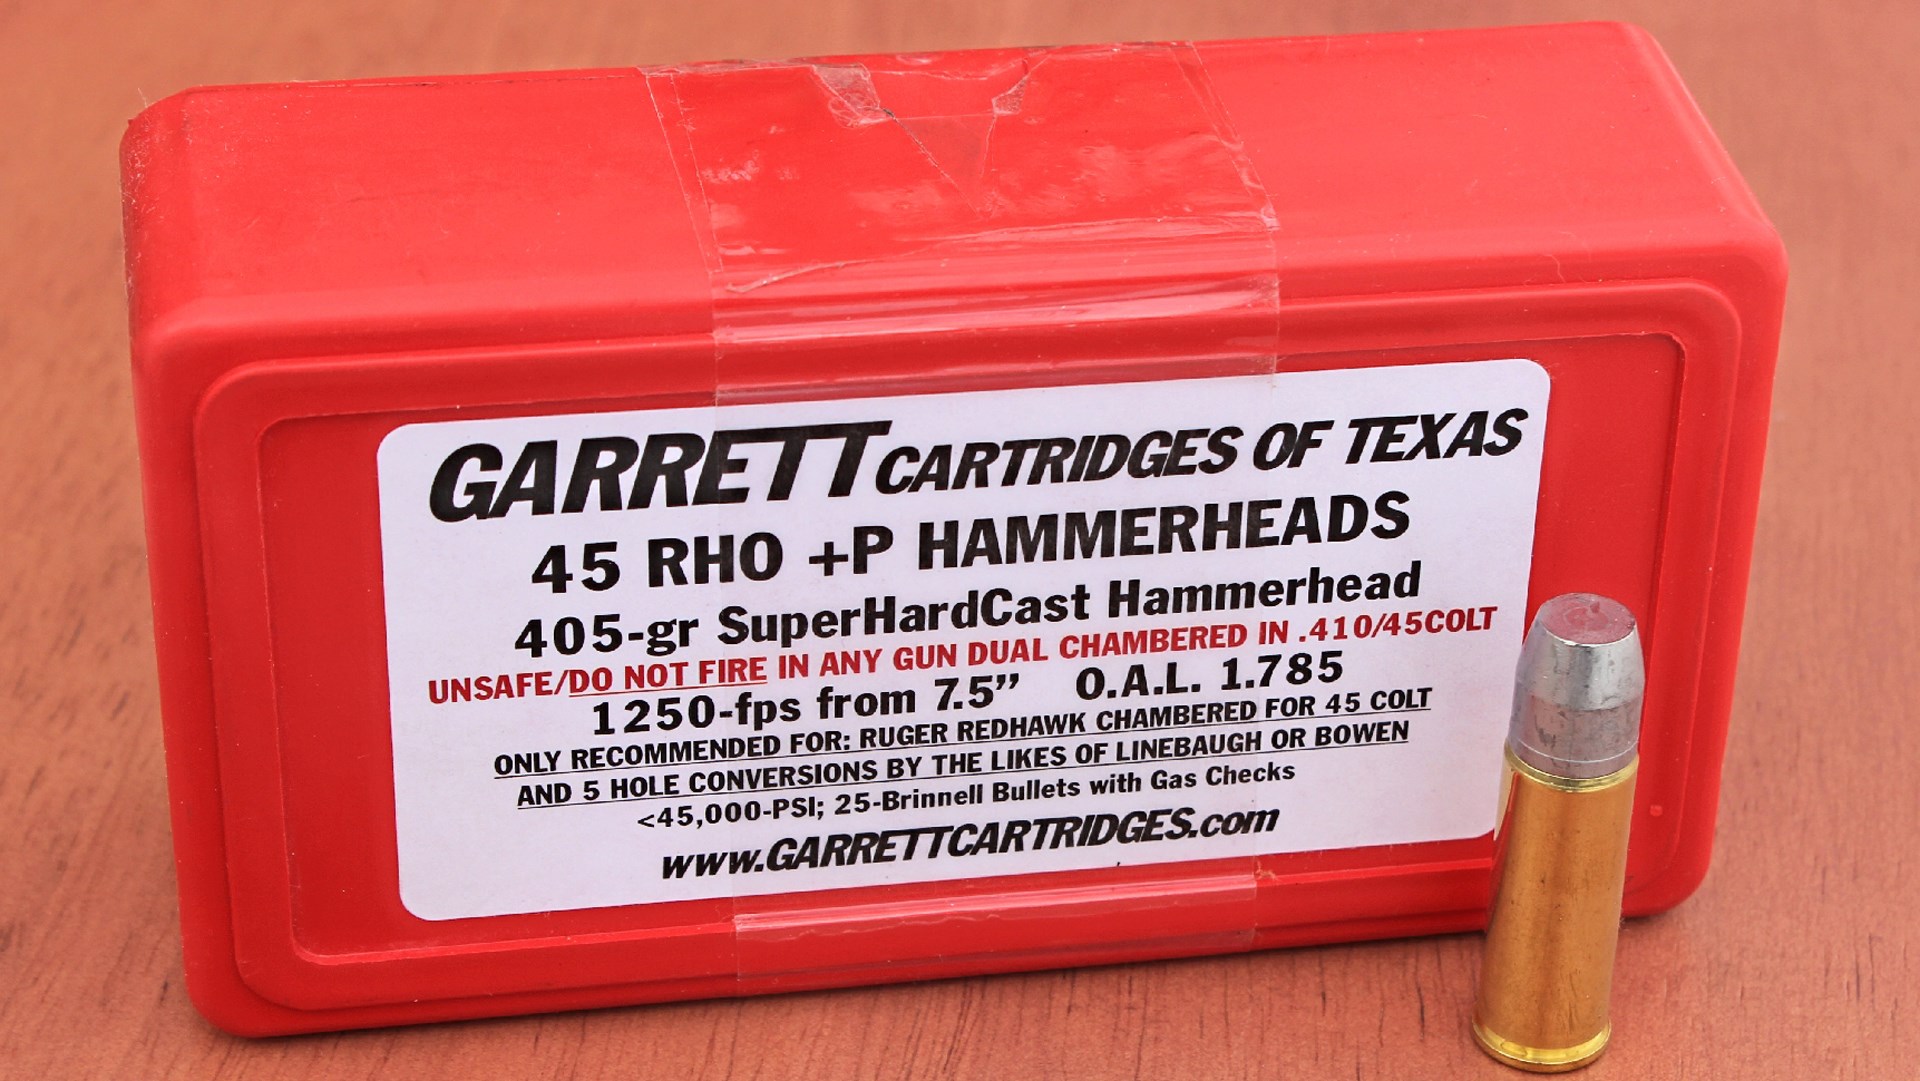 Garrett cartridges of texas 45 HO hammerheads red box ammunition bullets